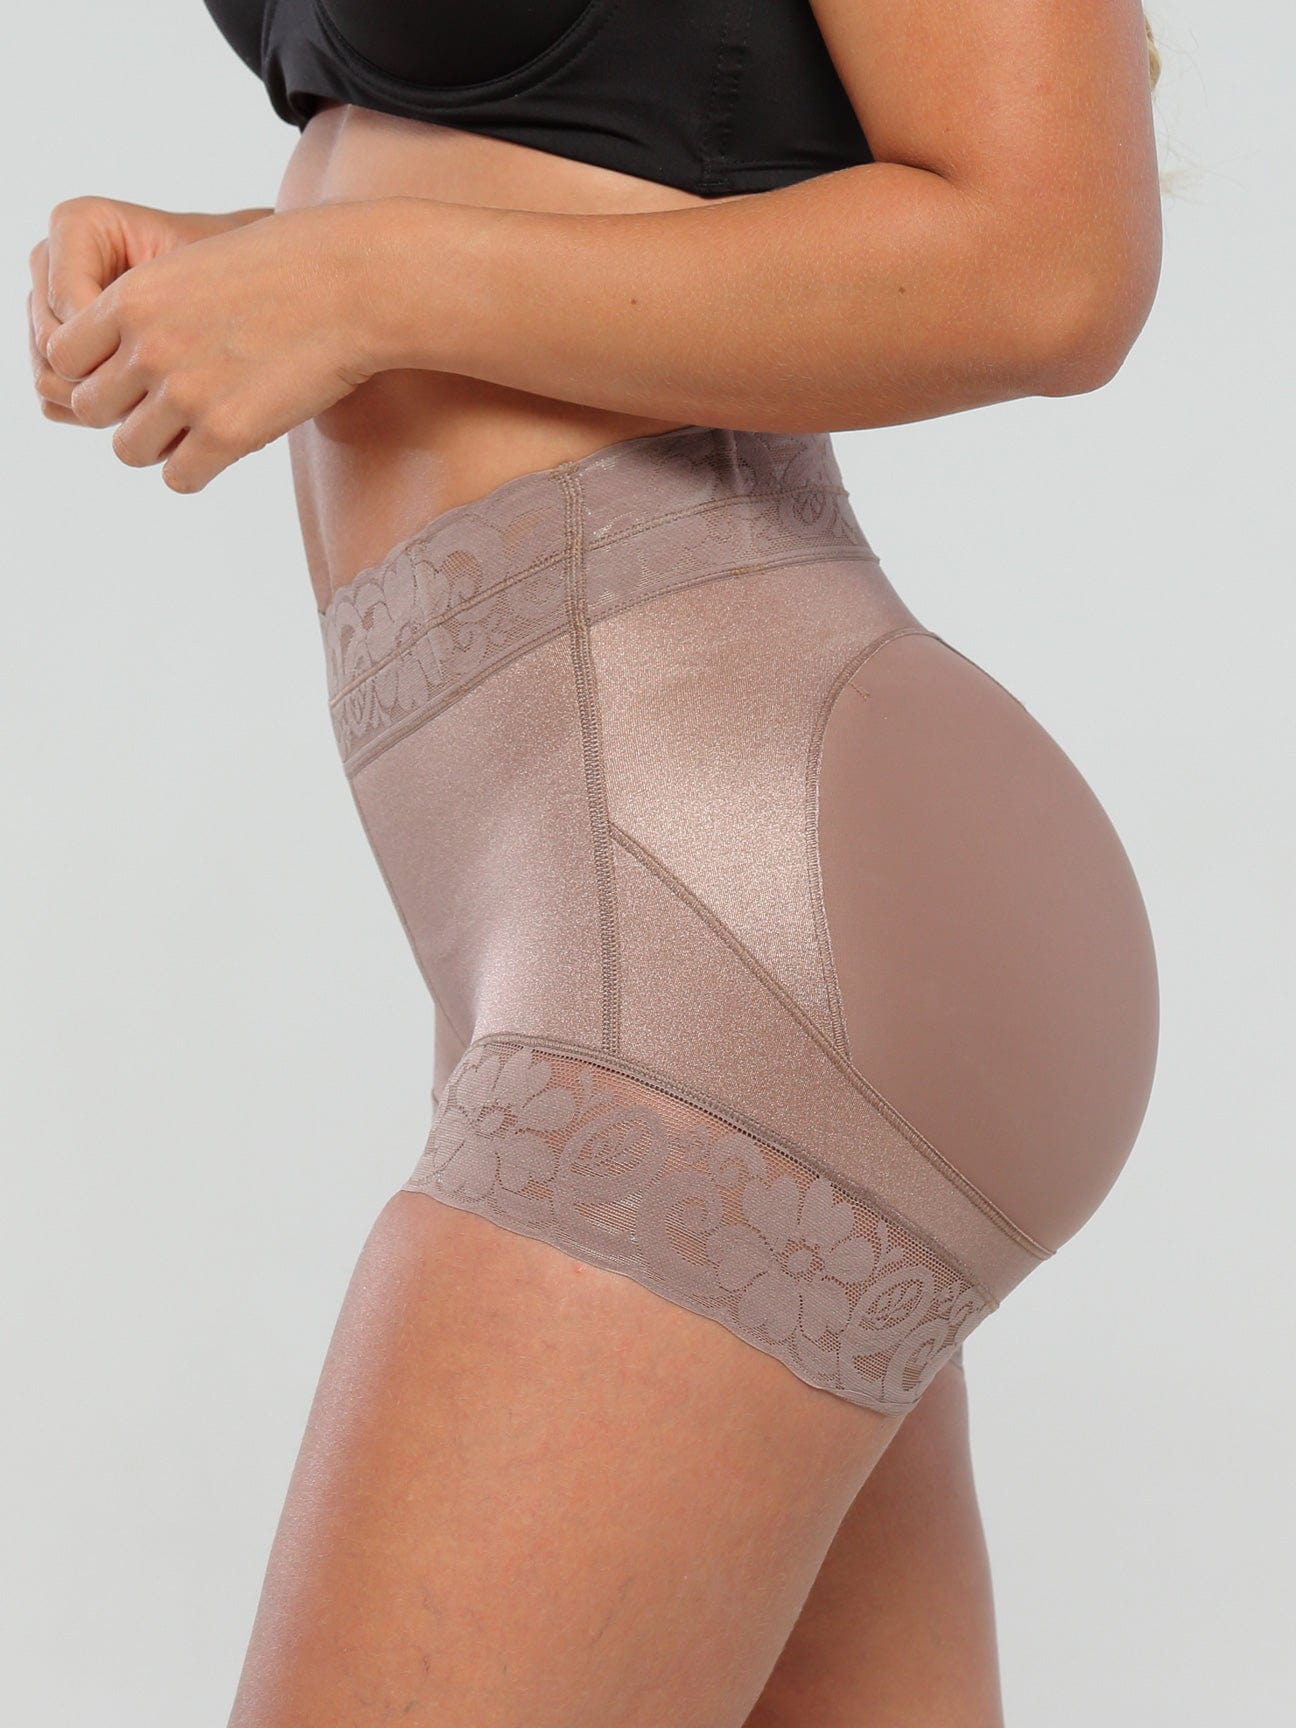 Padded Butt Lifter Underwear Womens Lace Control Panties Hip Enhancer  Boyshorts (Color : Black, Size : X-Large) price in Saudi Arabia,   Saudi Arabia